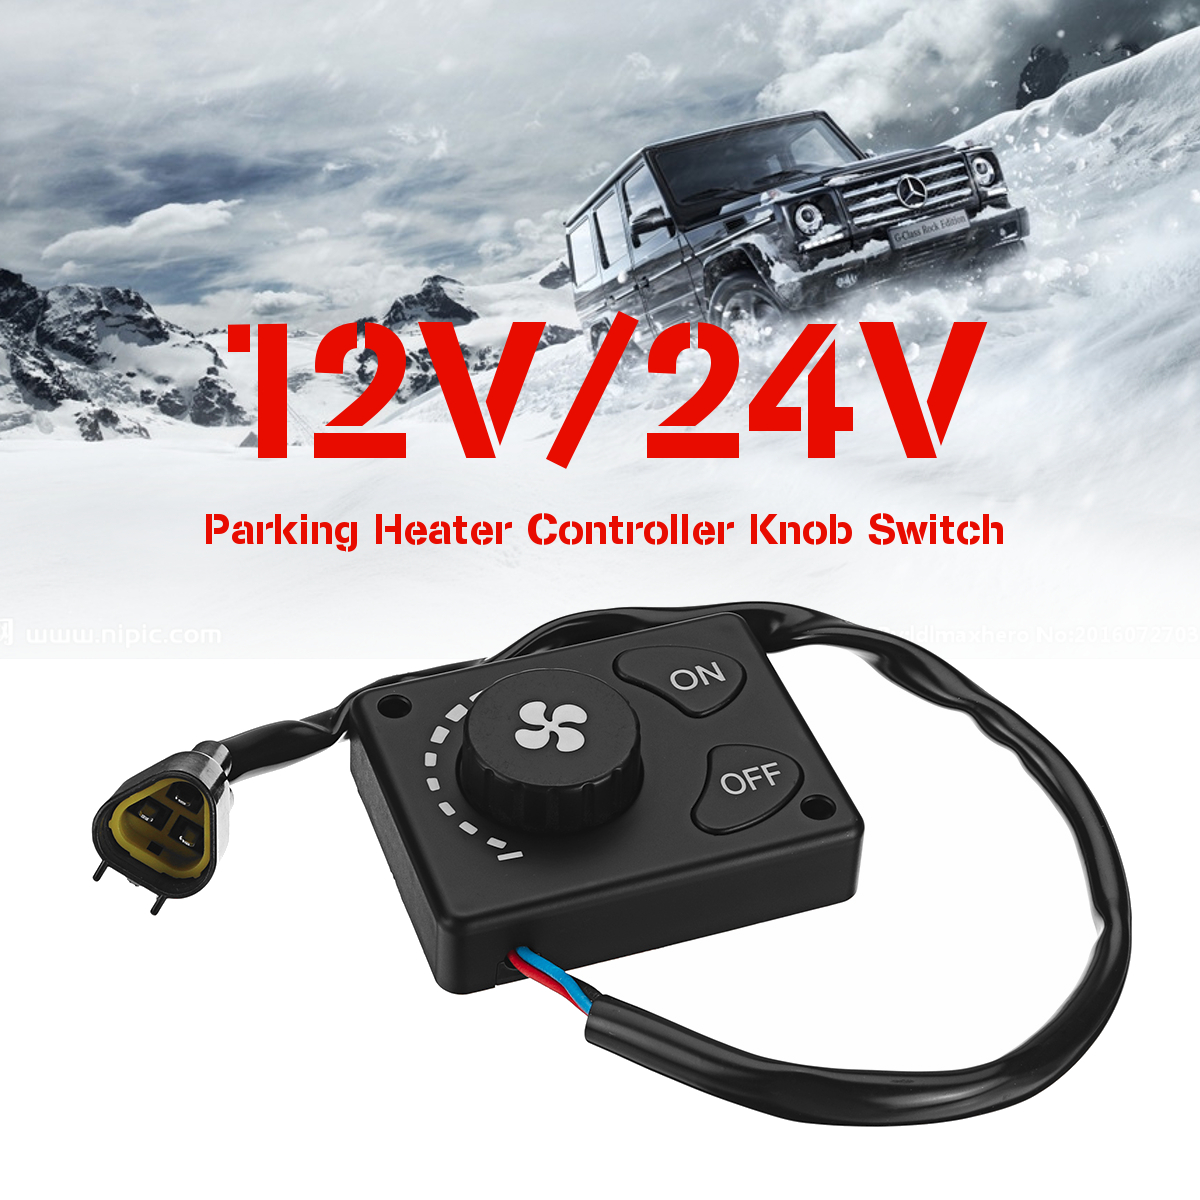 12V24V-Parking-Heater-Controller-Switch-Knob-For-Air-Diesel-Heater-1388908-1